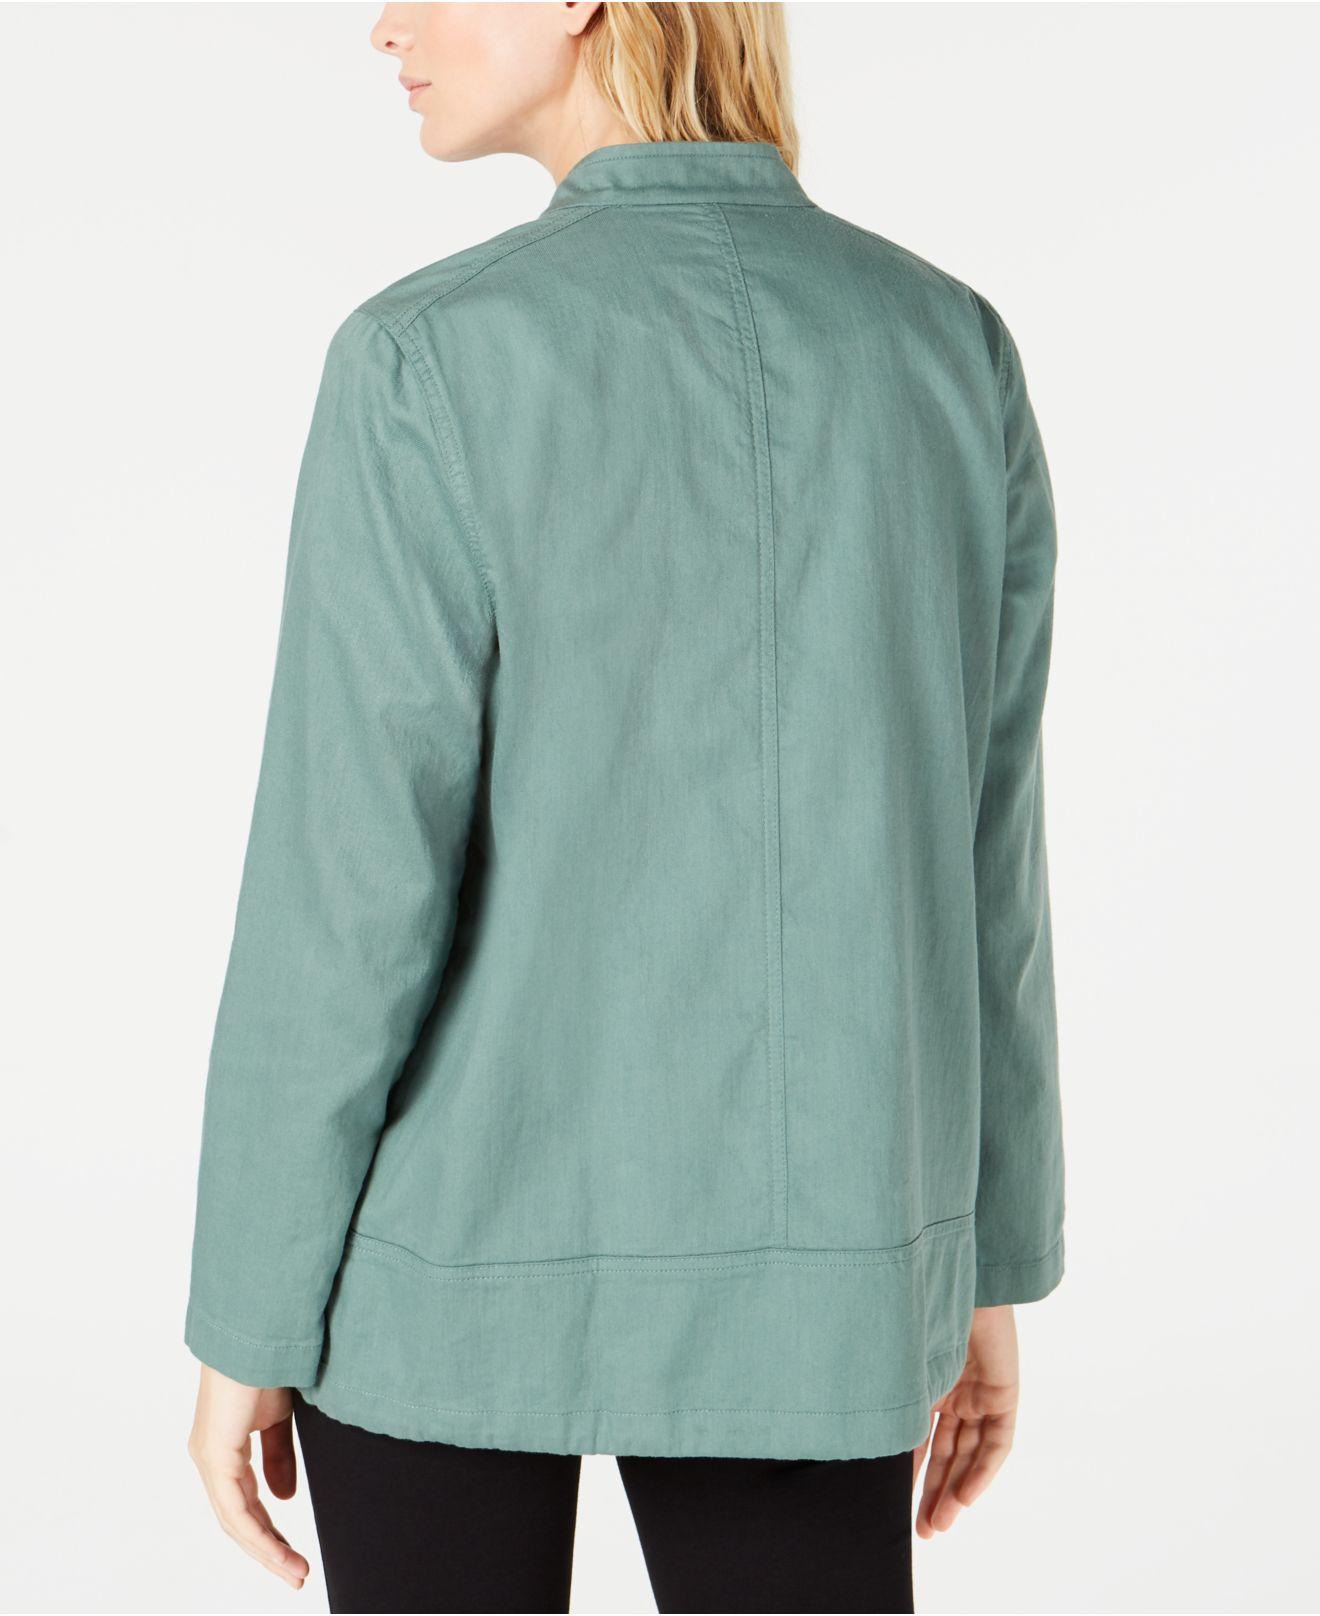 Eileen Fisher Organic Cotton Zip-front Jacket in Green - Lyst